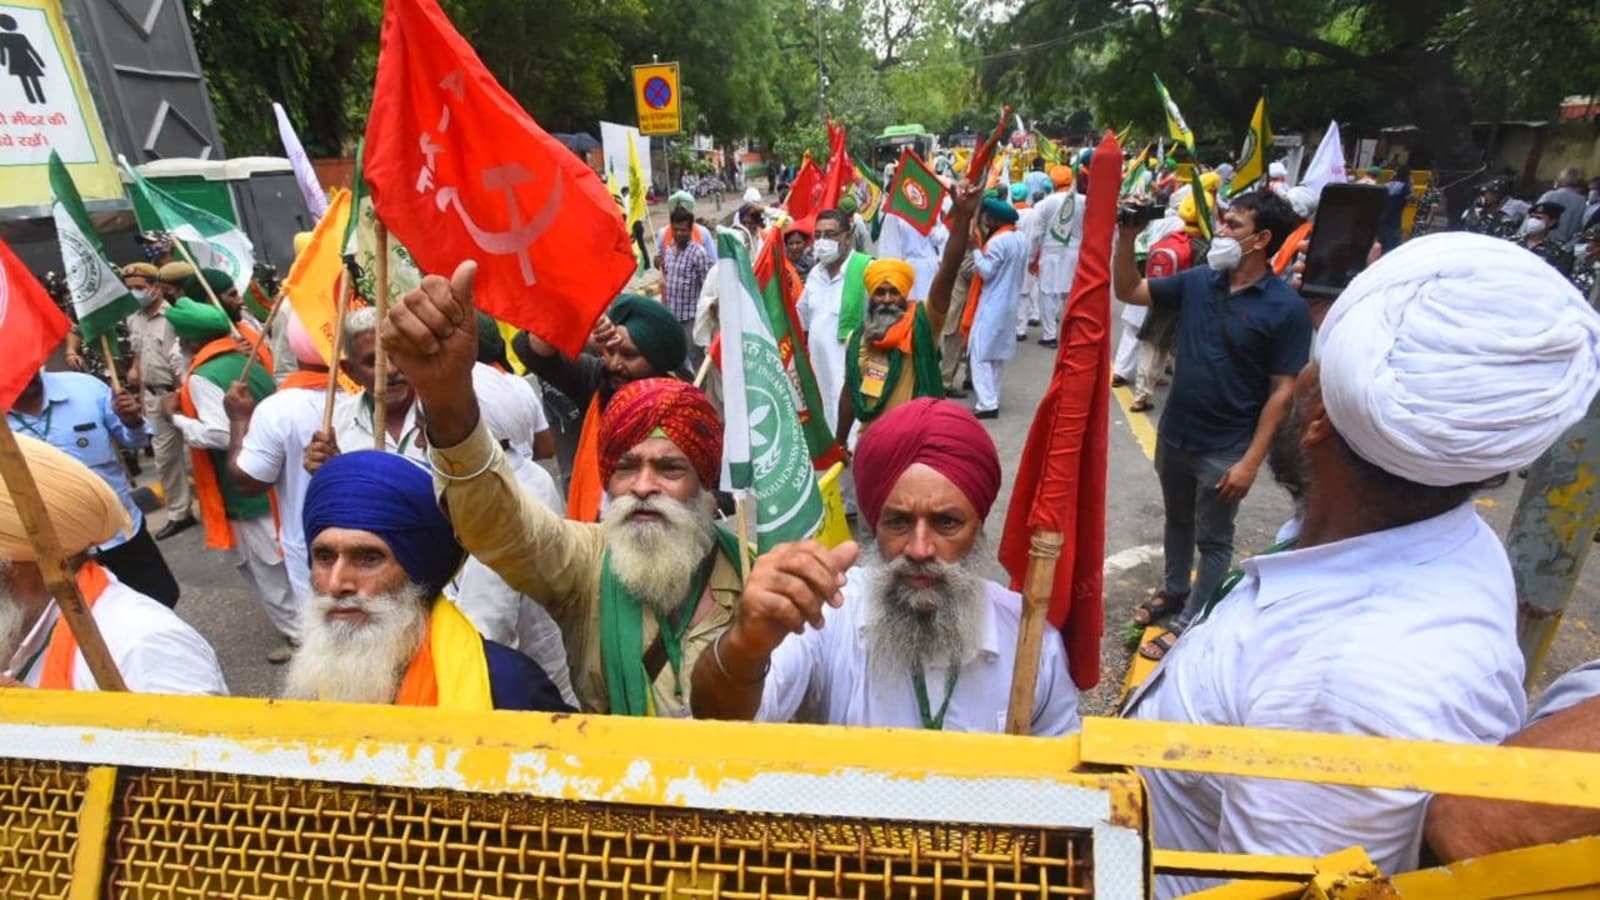 Farmers' protest LIVE updates: Agitation begins at Delhi's Jantar Mantar amid heavy security | Hindustan Times